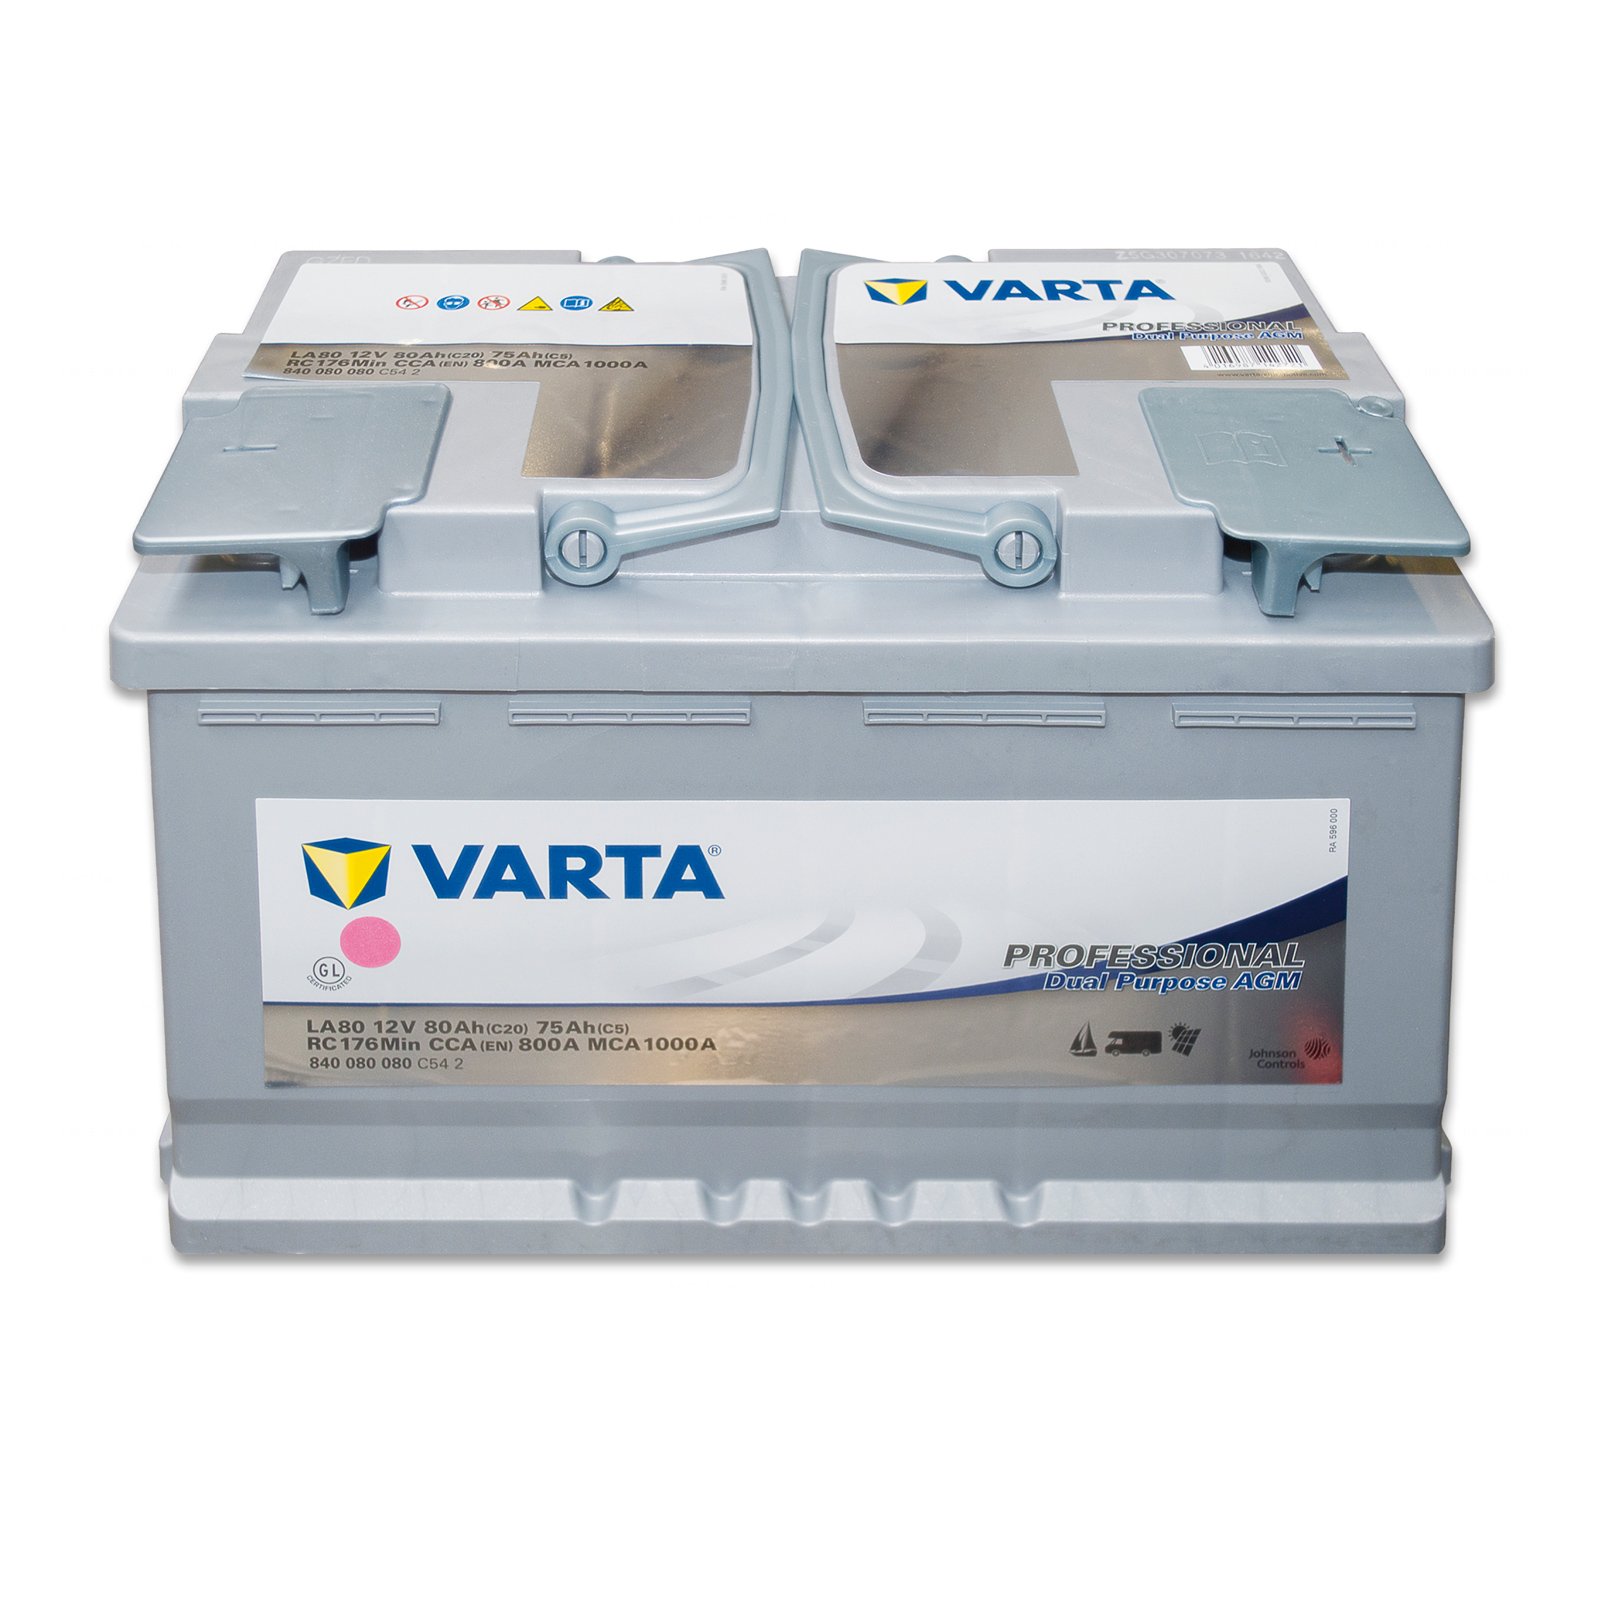 Varta Professional Dual Purpose AGM LA80 von Varta